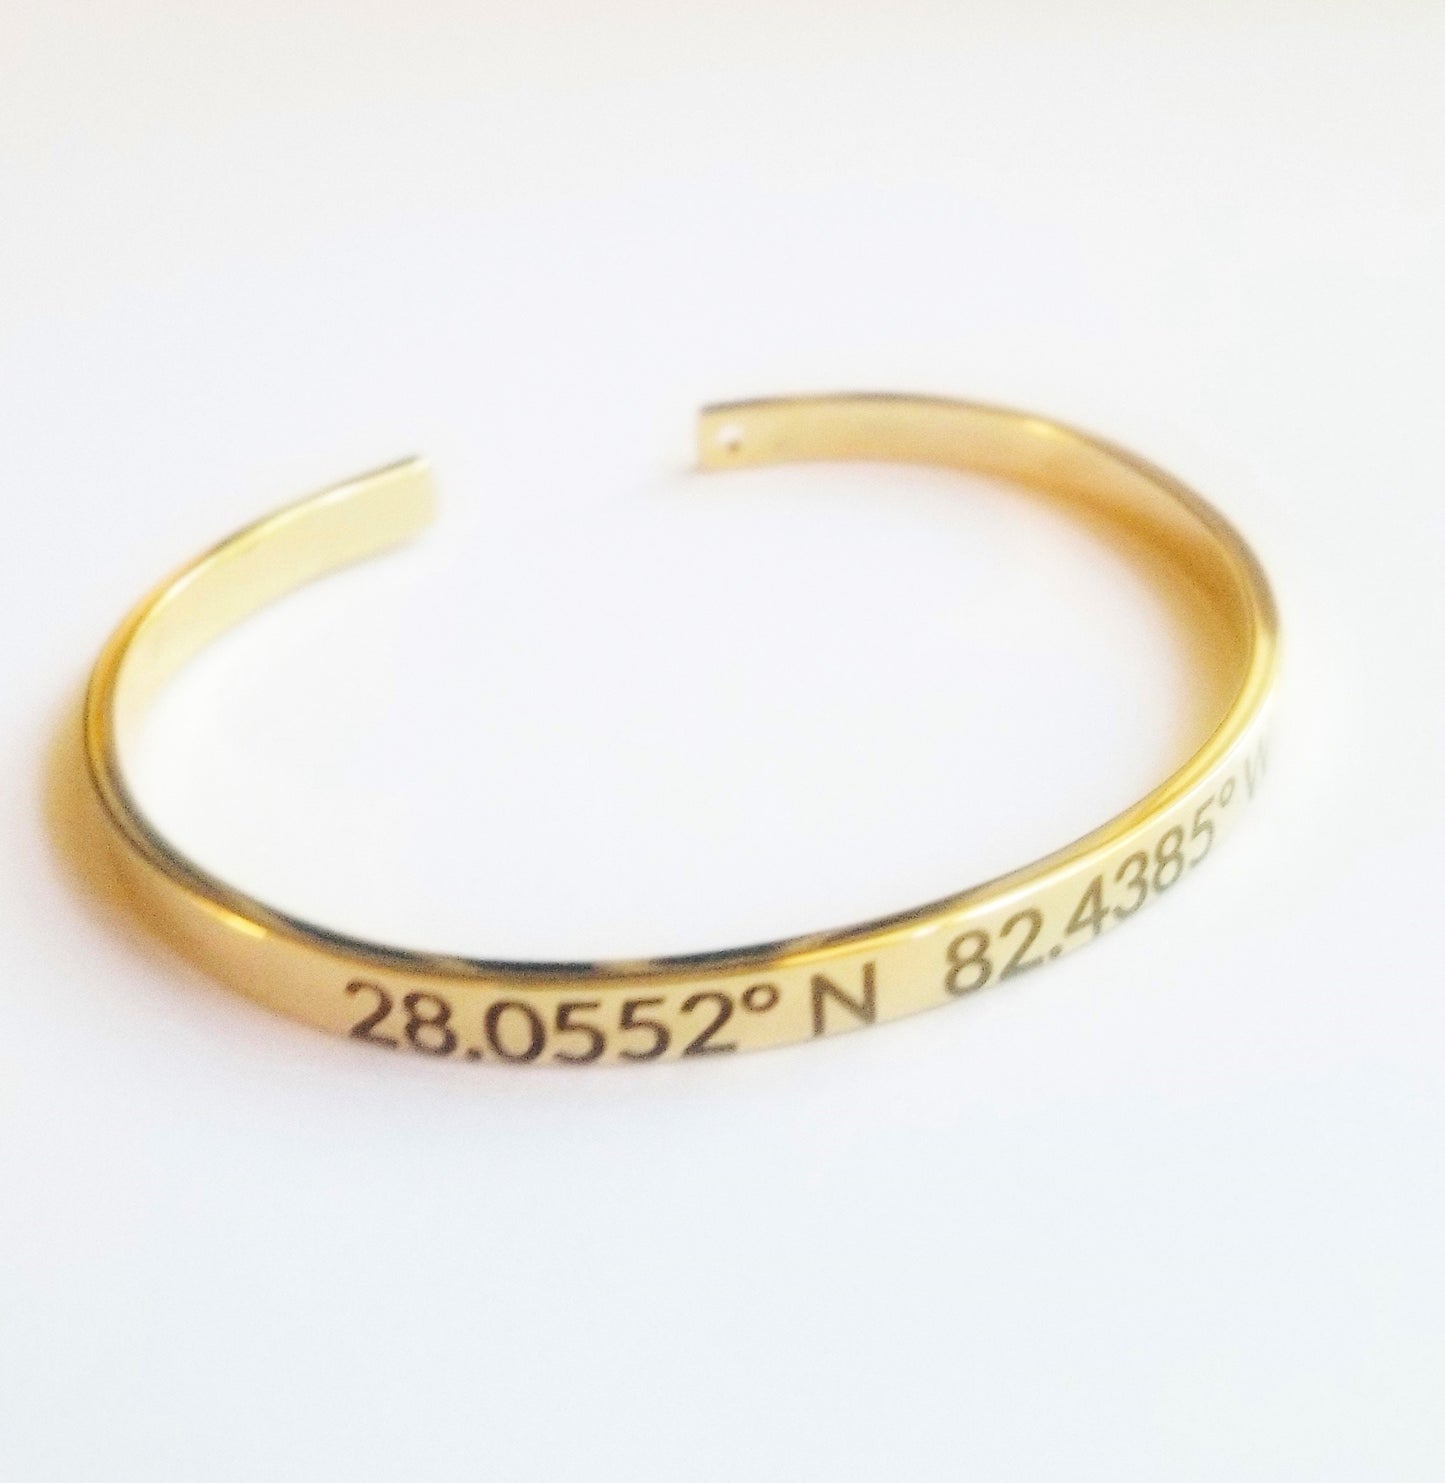 Custom Geographic Coordinates Bracelet - Latitude & Longitude, Engraved GPS cuff in silver, Rose Gold, Gold adjustable bangle